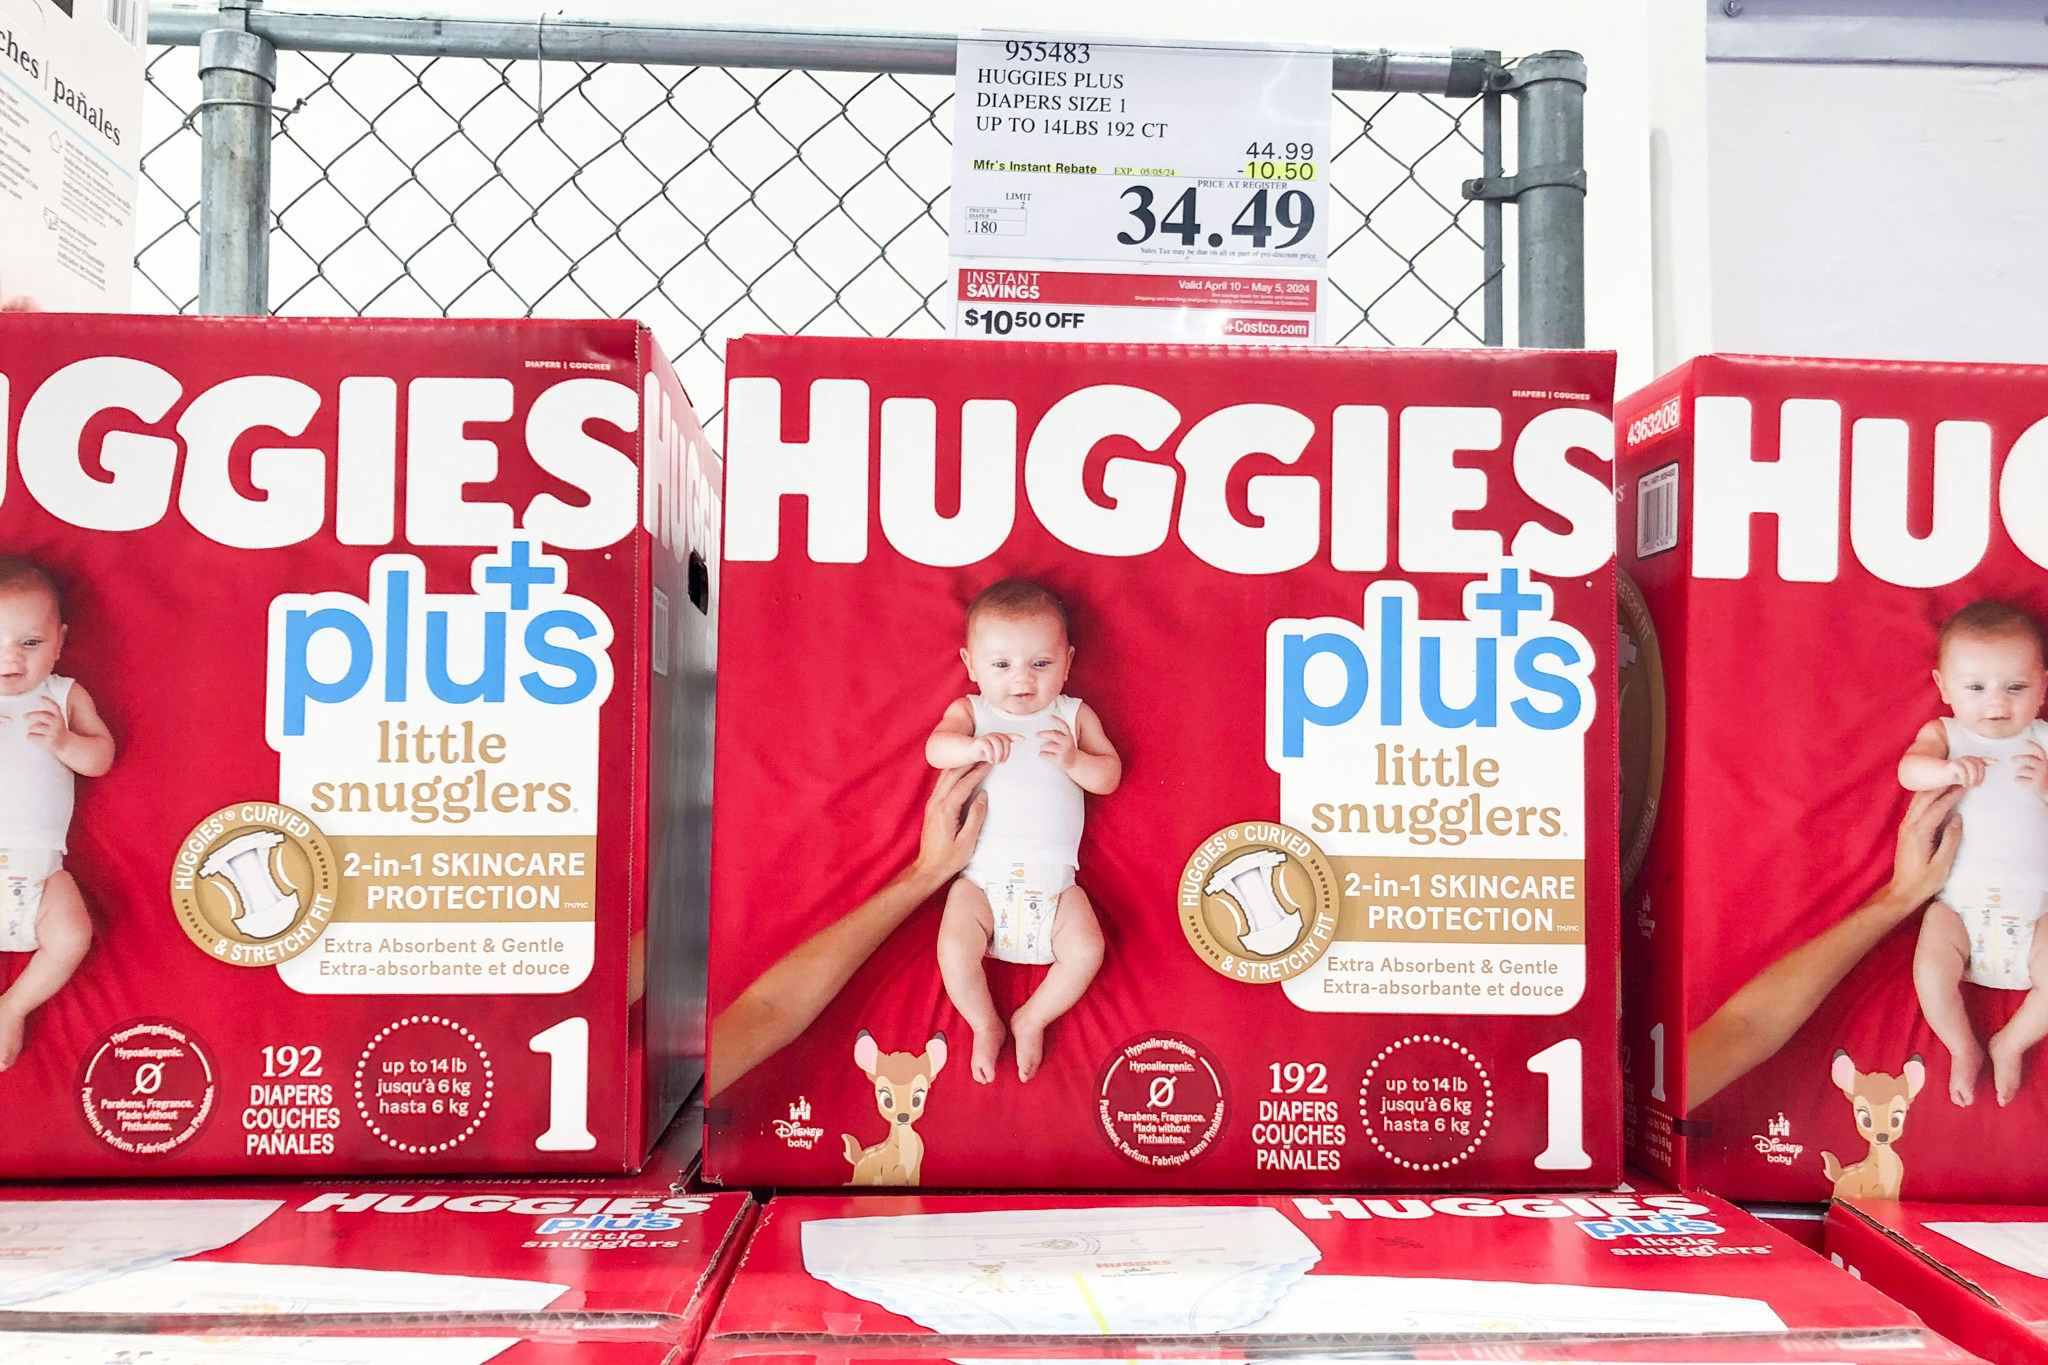 Score Savings on Huggies Diapers at Costco — Get $10.50 Off